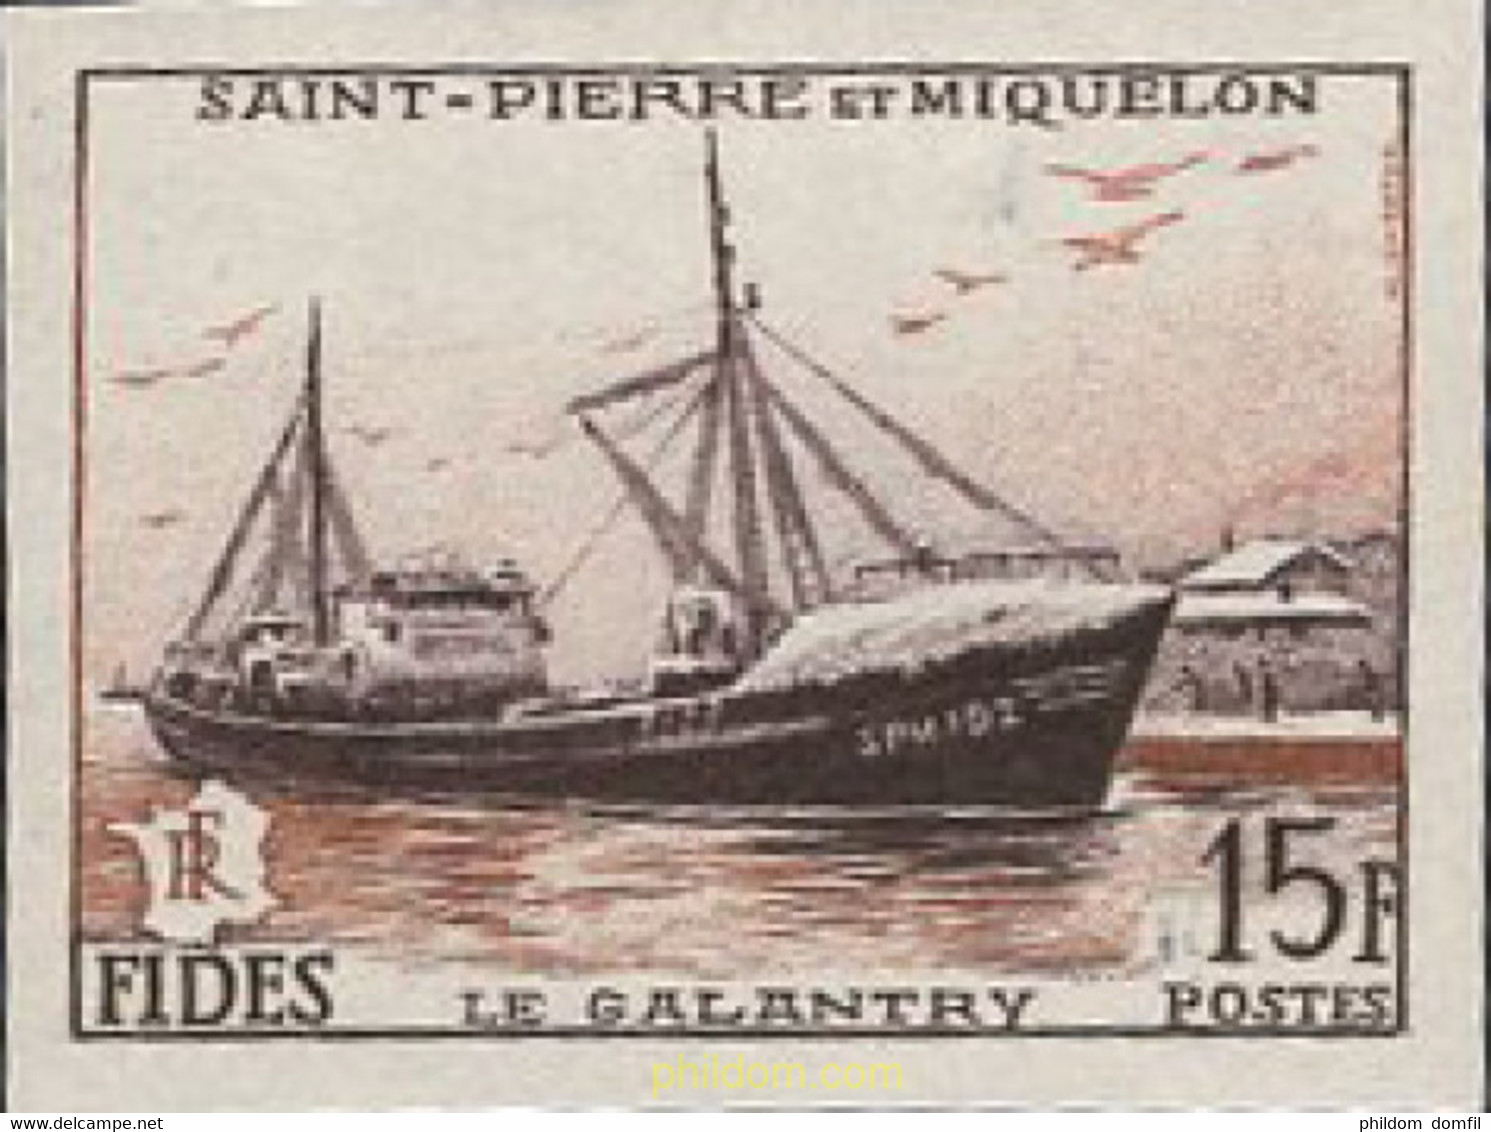 21026 MNH SAN PEDRO Y MIQUELON 1956 FIDES - Used Stamps